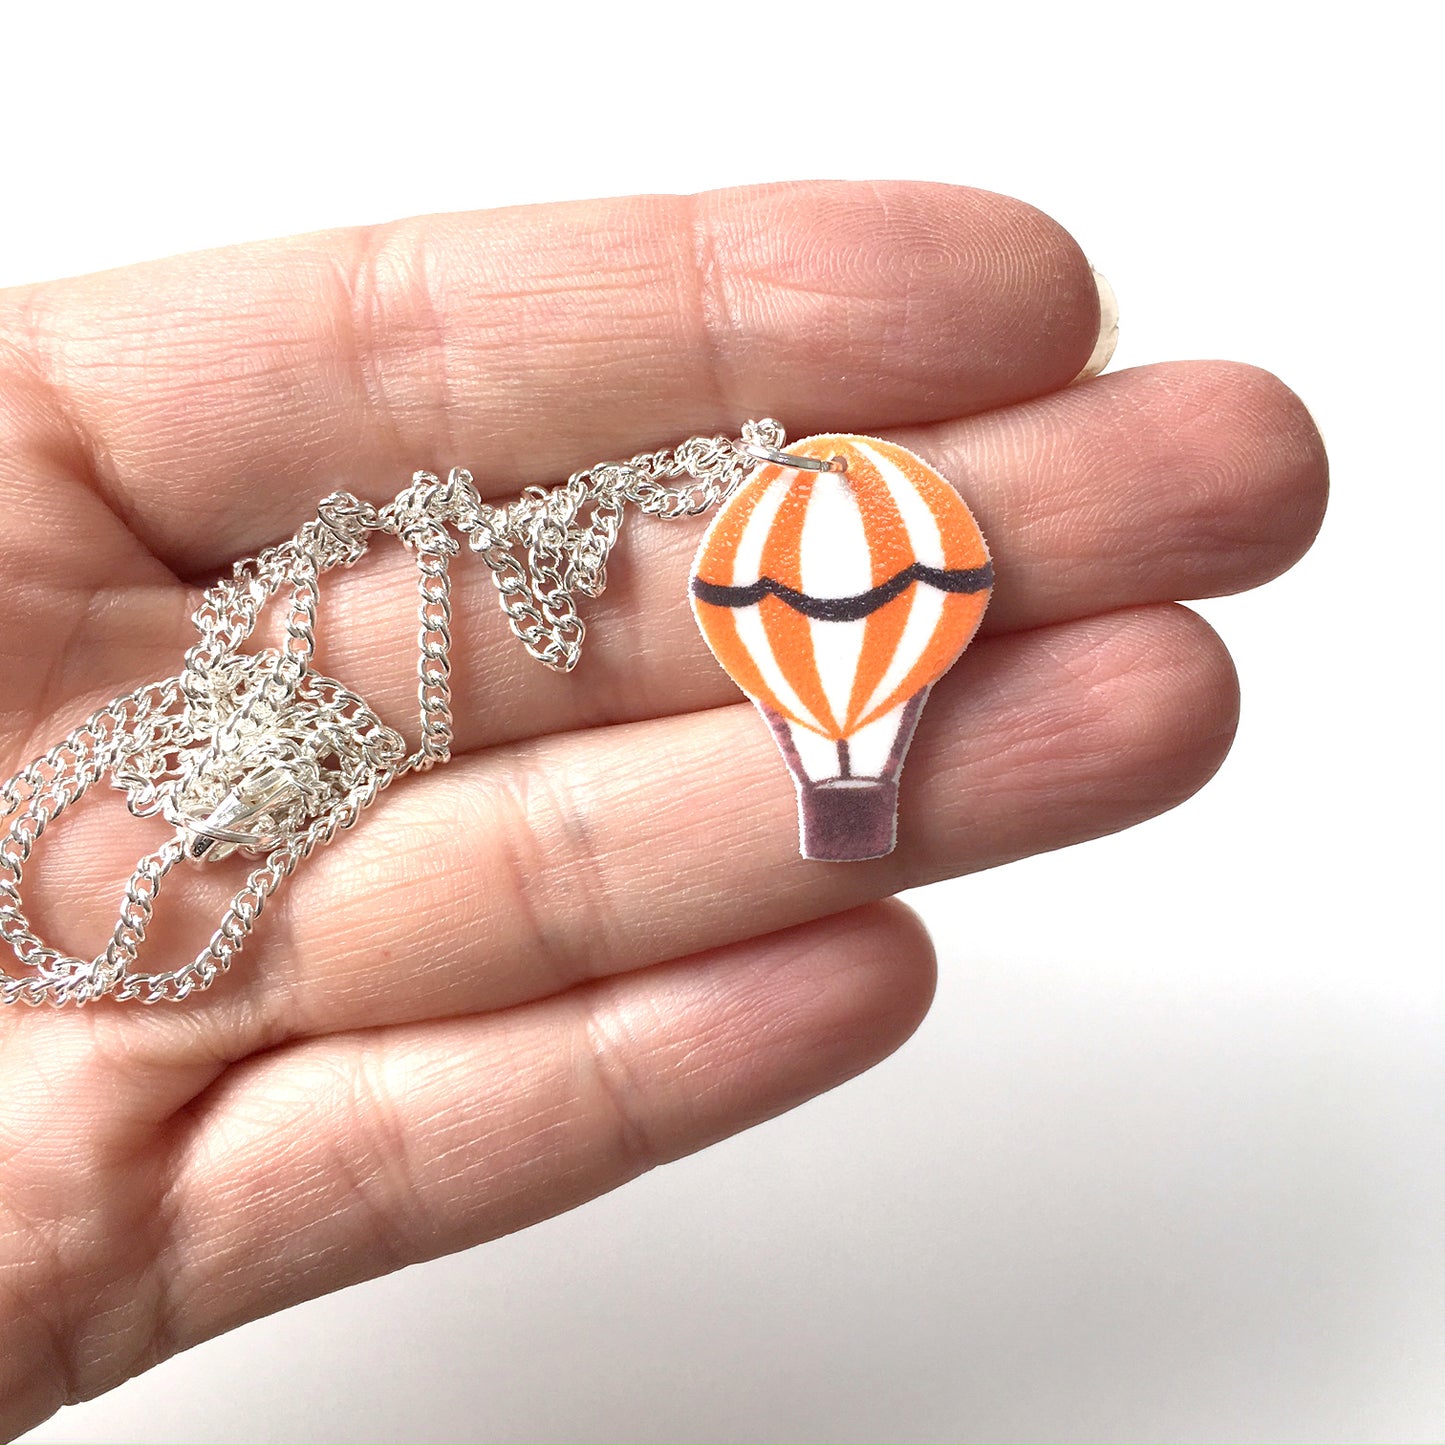 Orange hot air balloon pendant necklace